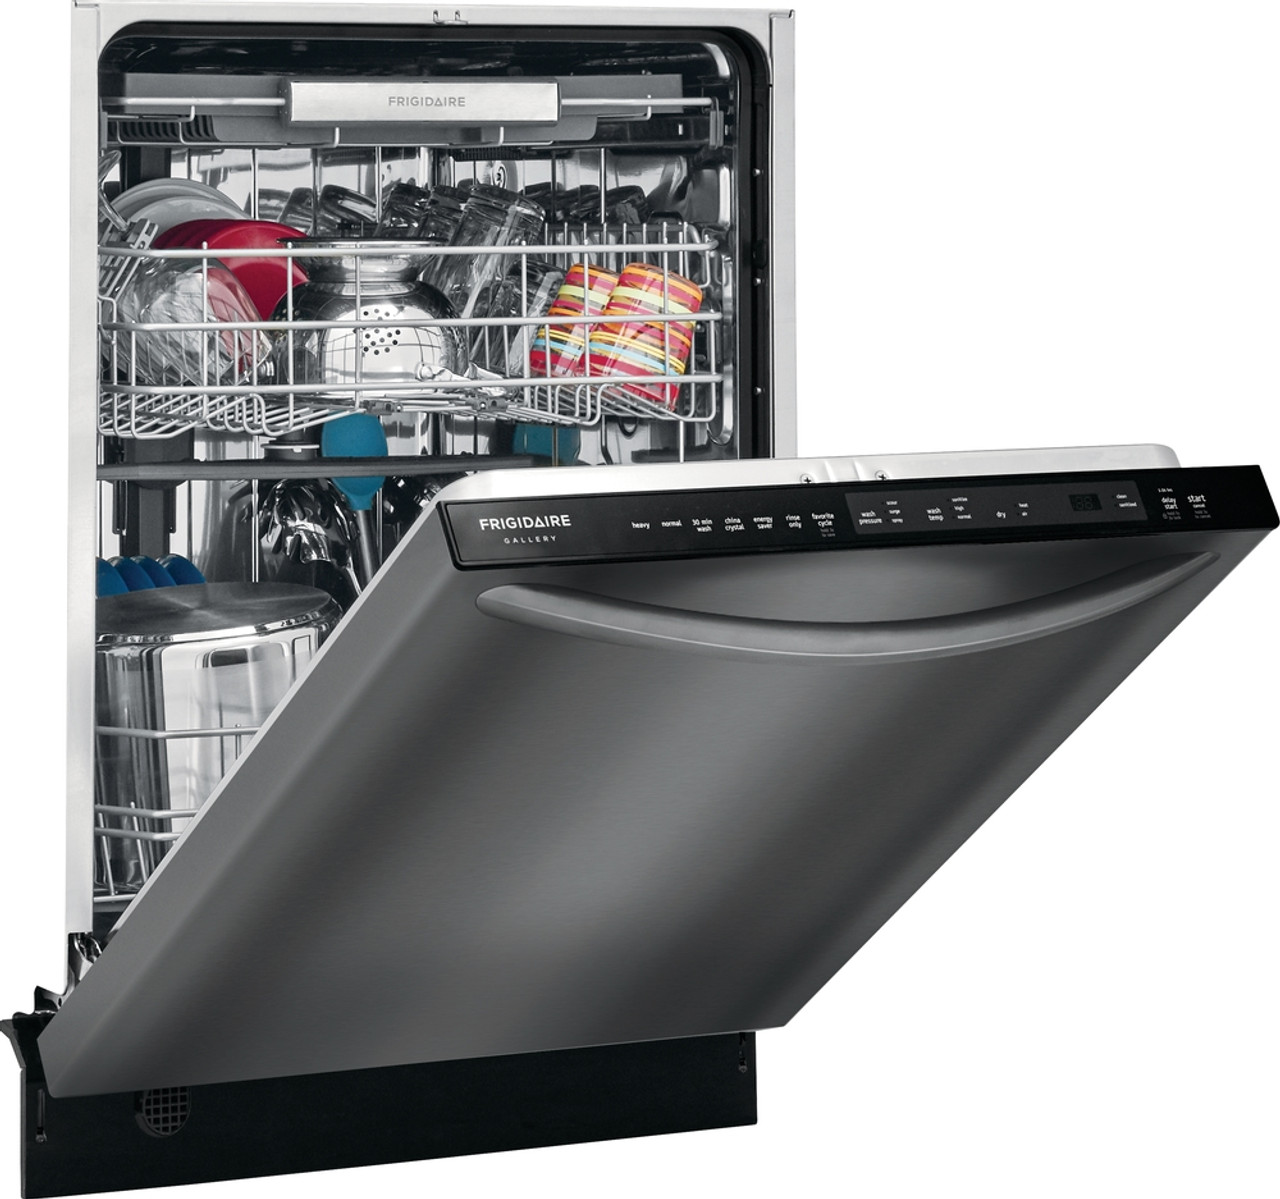 Frigidaire Gallery 24 Built-in Dishwasher - SS - FGID2479SF